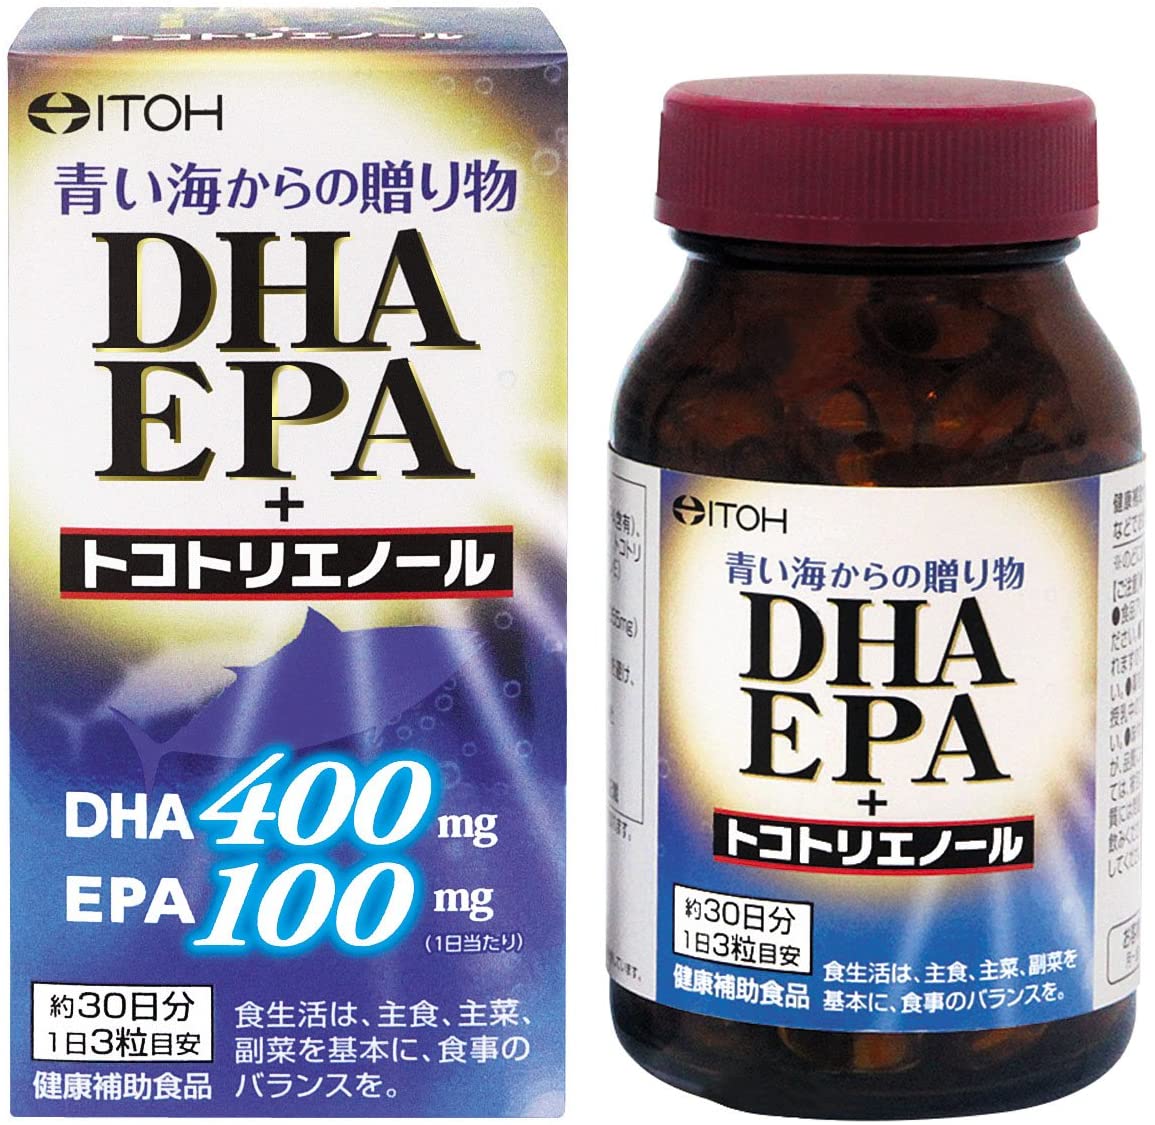 Комплекс для укрепления организма с Омега 3 и антиоксидантами DHA EPA + Tocotrienol ITOH, 90 шт